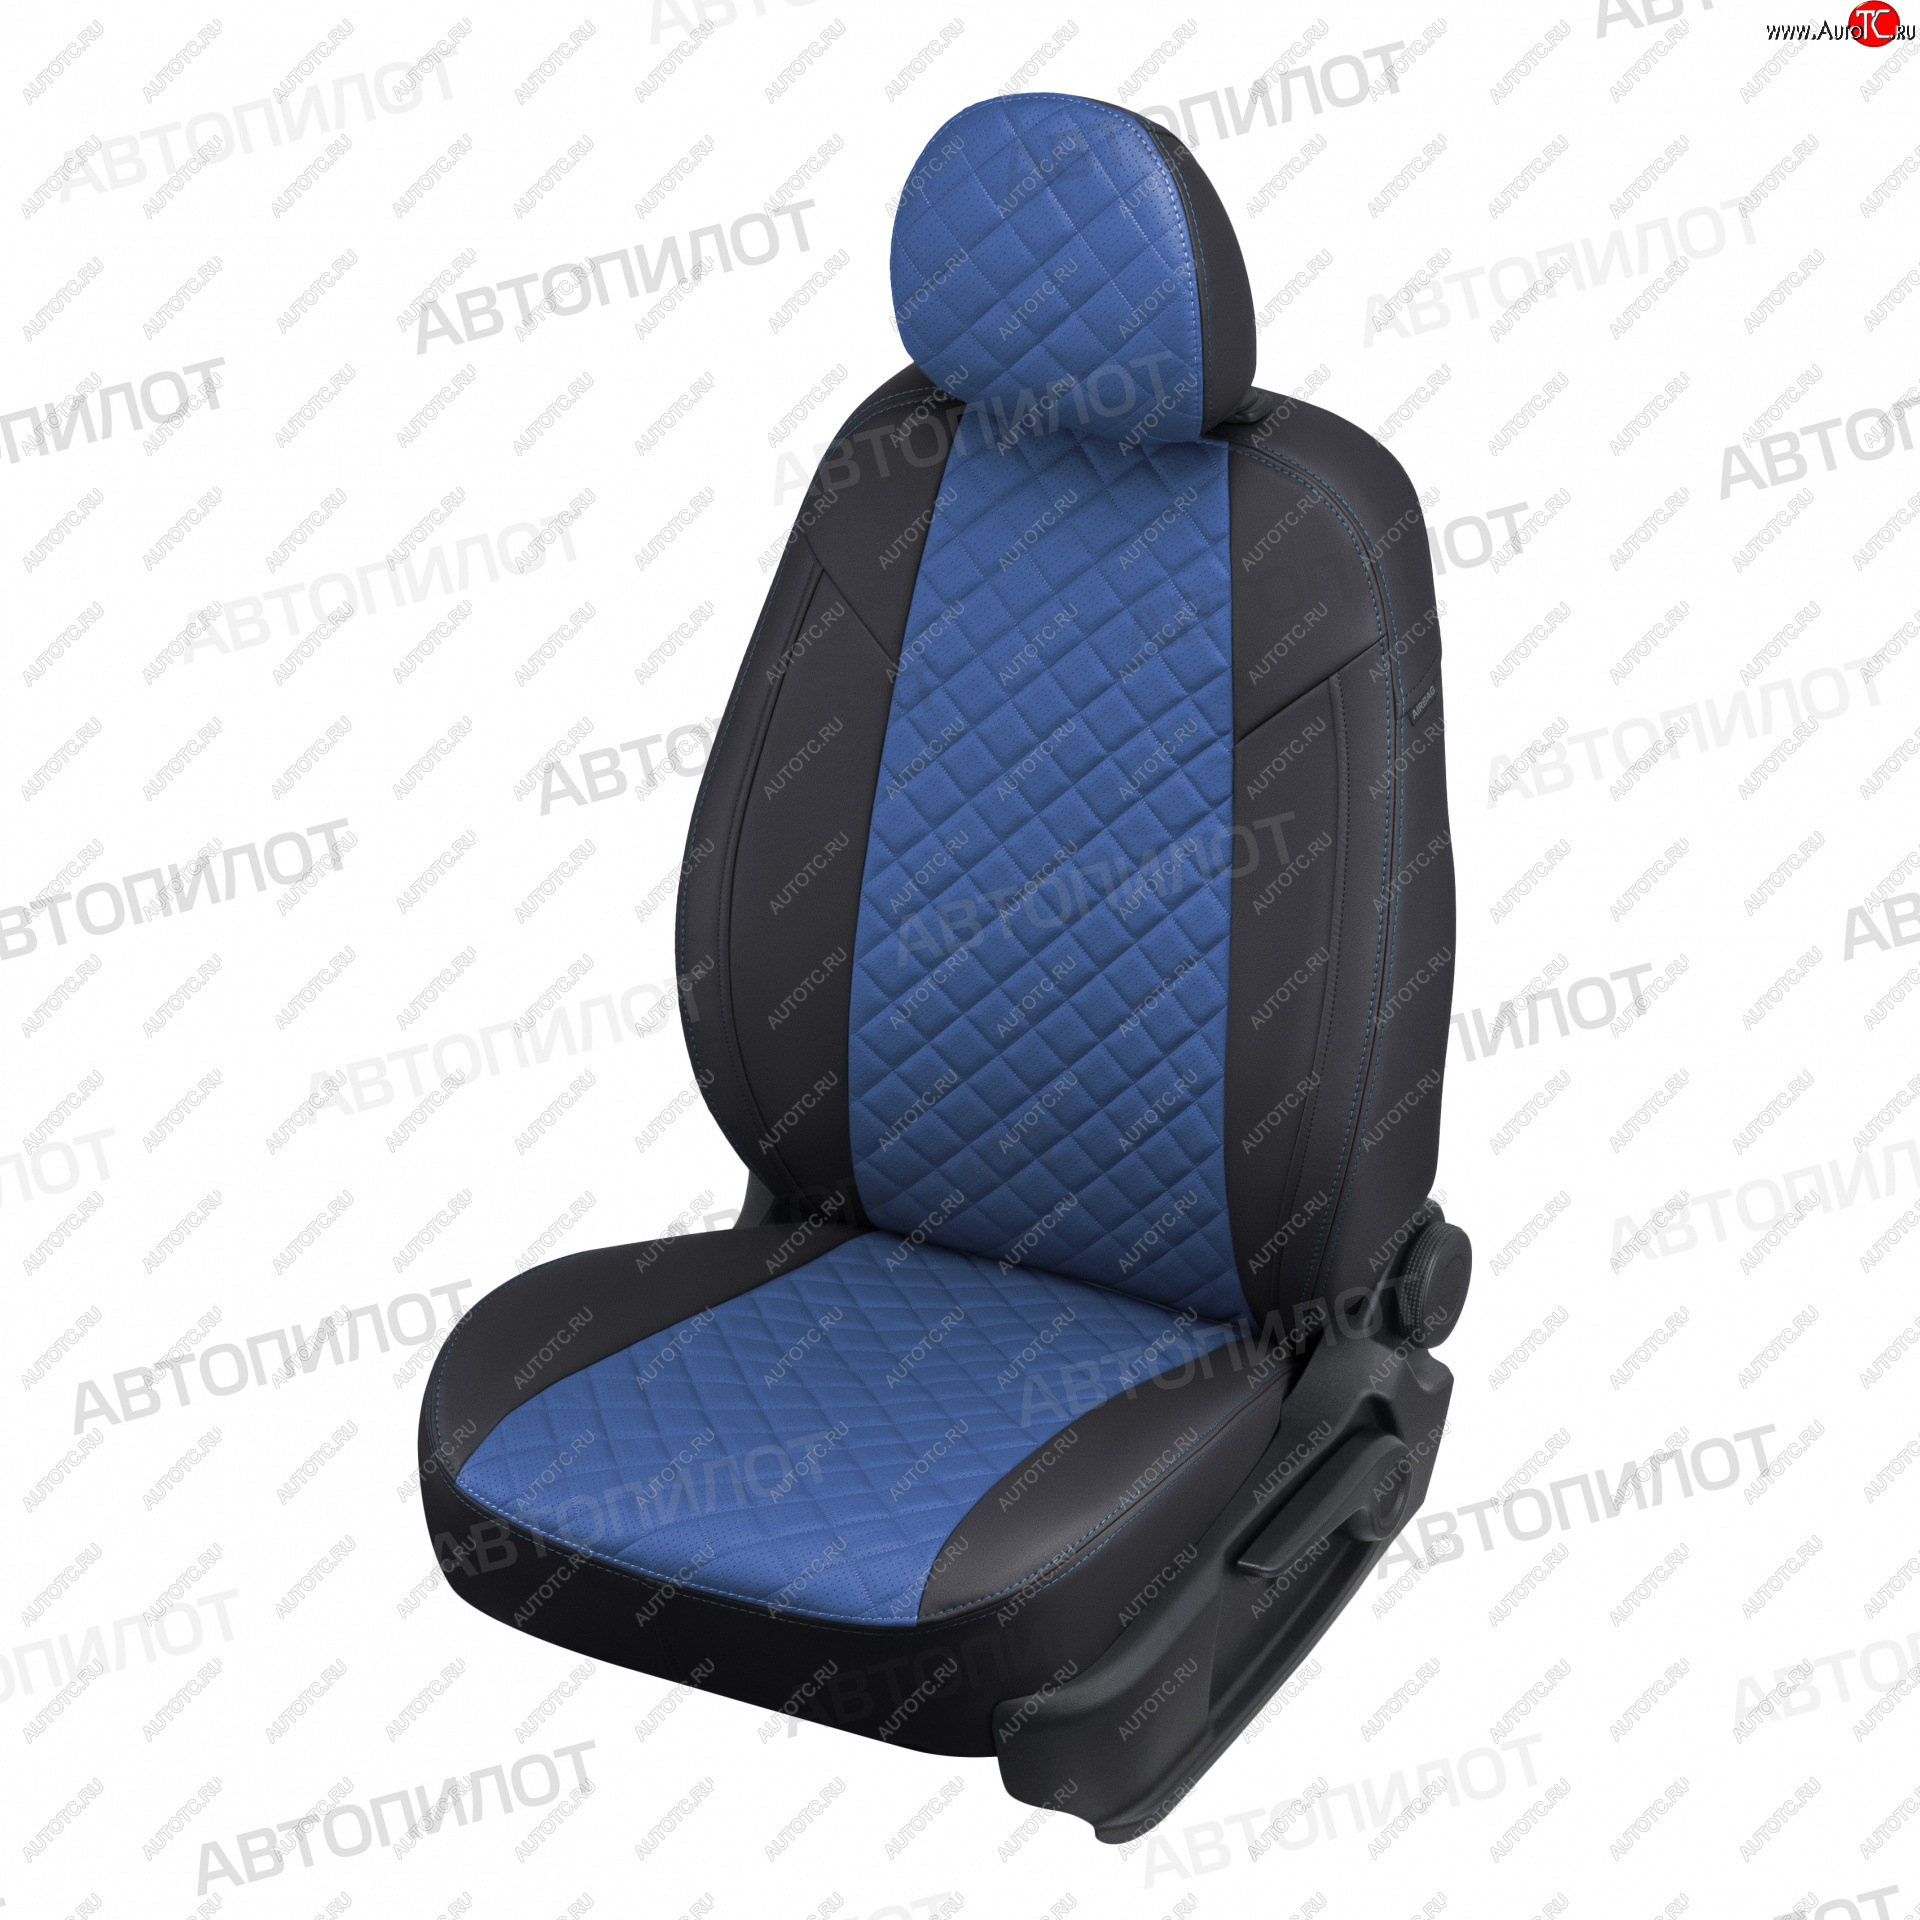 13 999 р. Чехлы сидений (экокожа) Автопилот Ромб  KIA Rio  1 DC (2000-2005) (черный/синий)